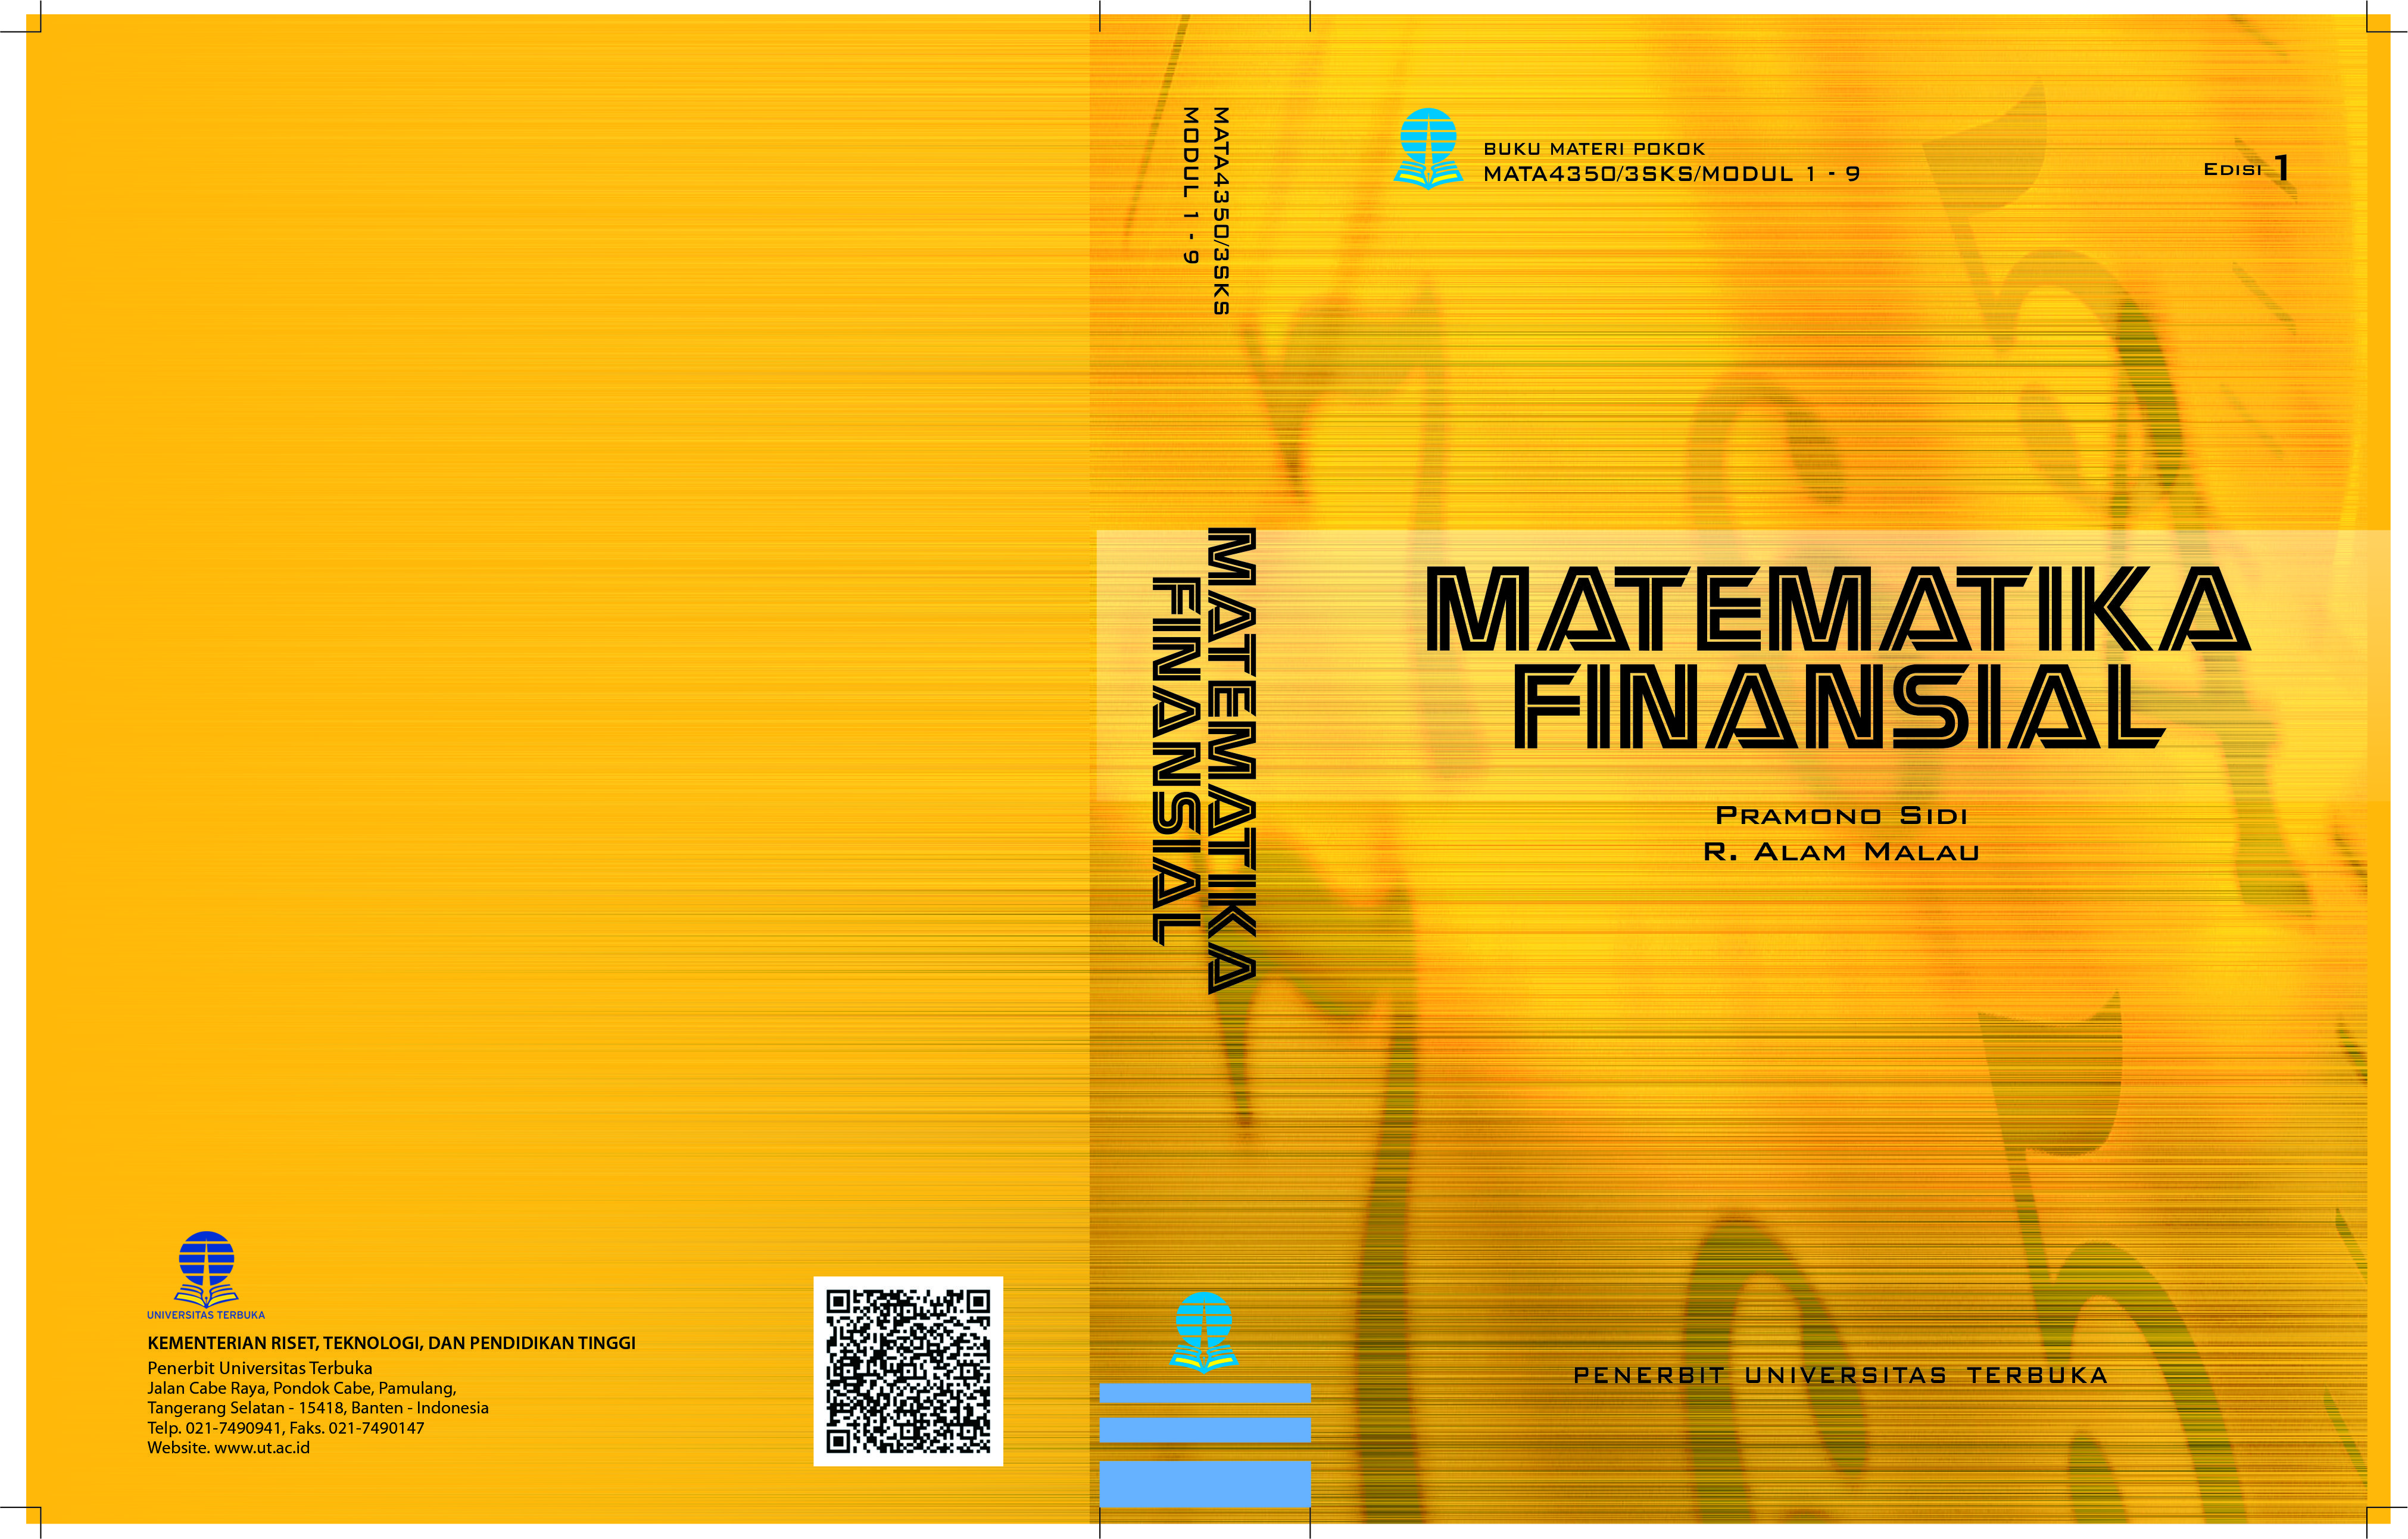 Matematika Finansial MATA4350